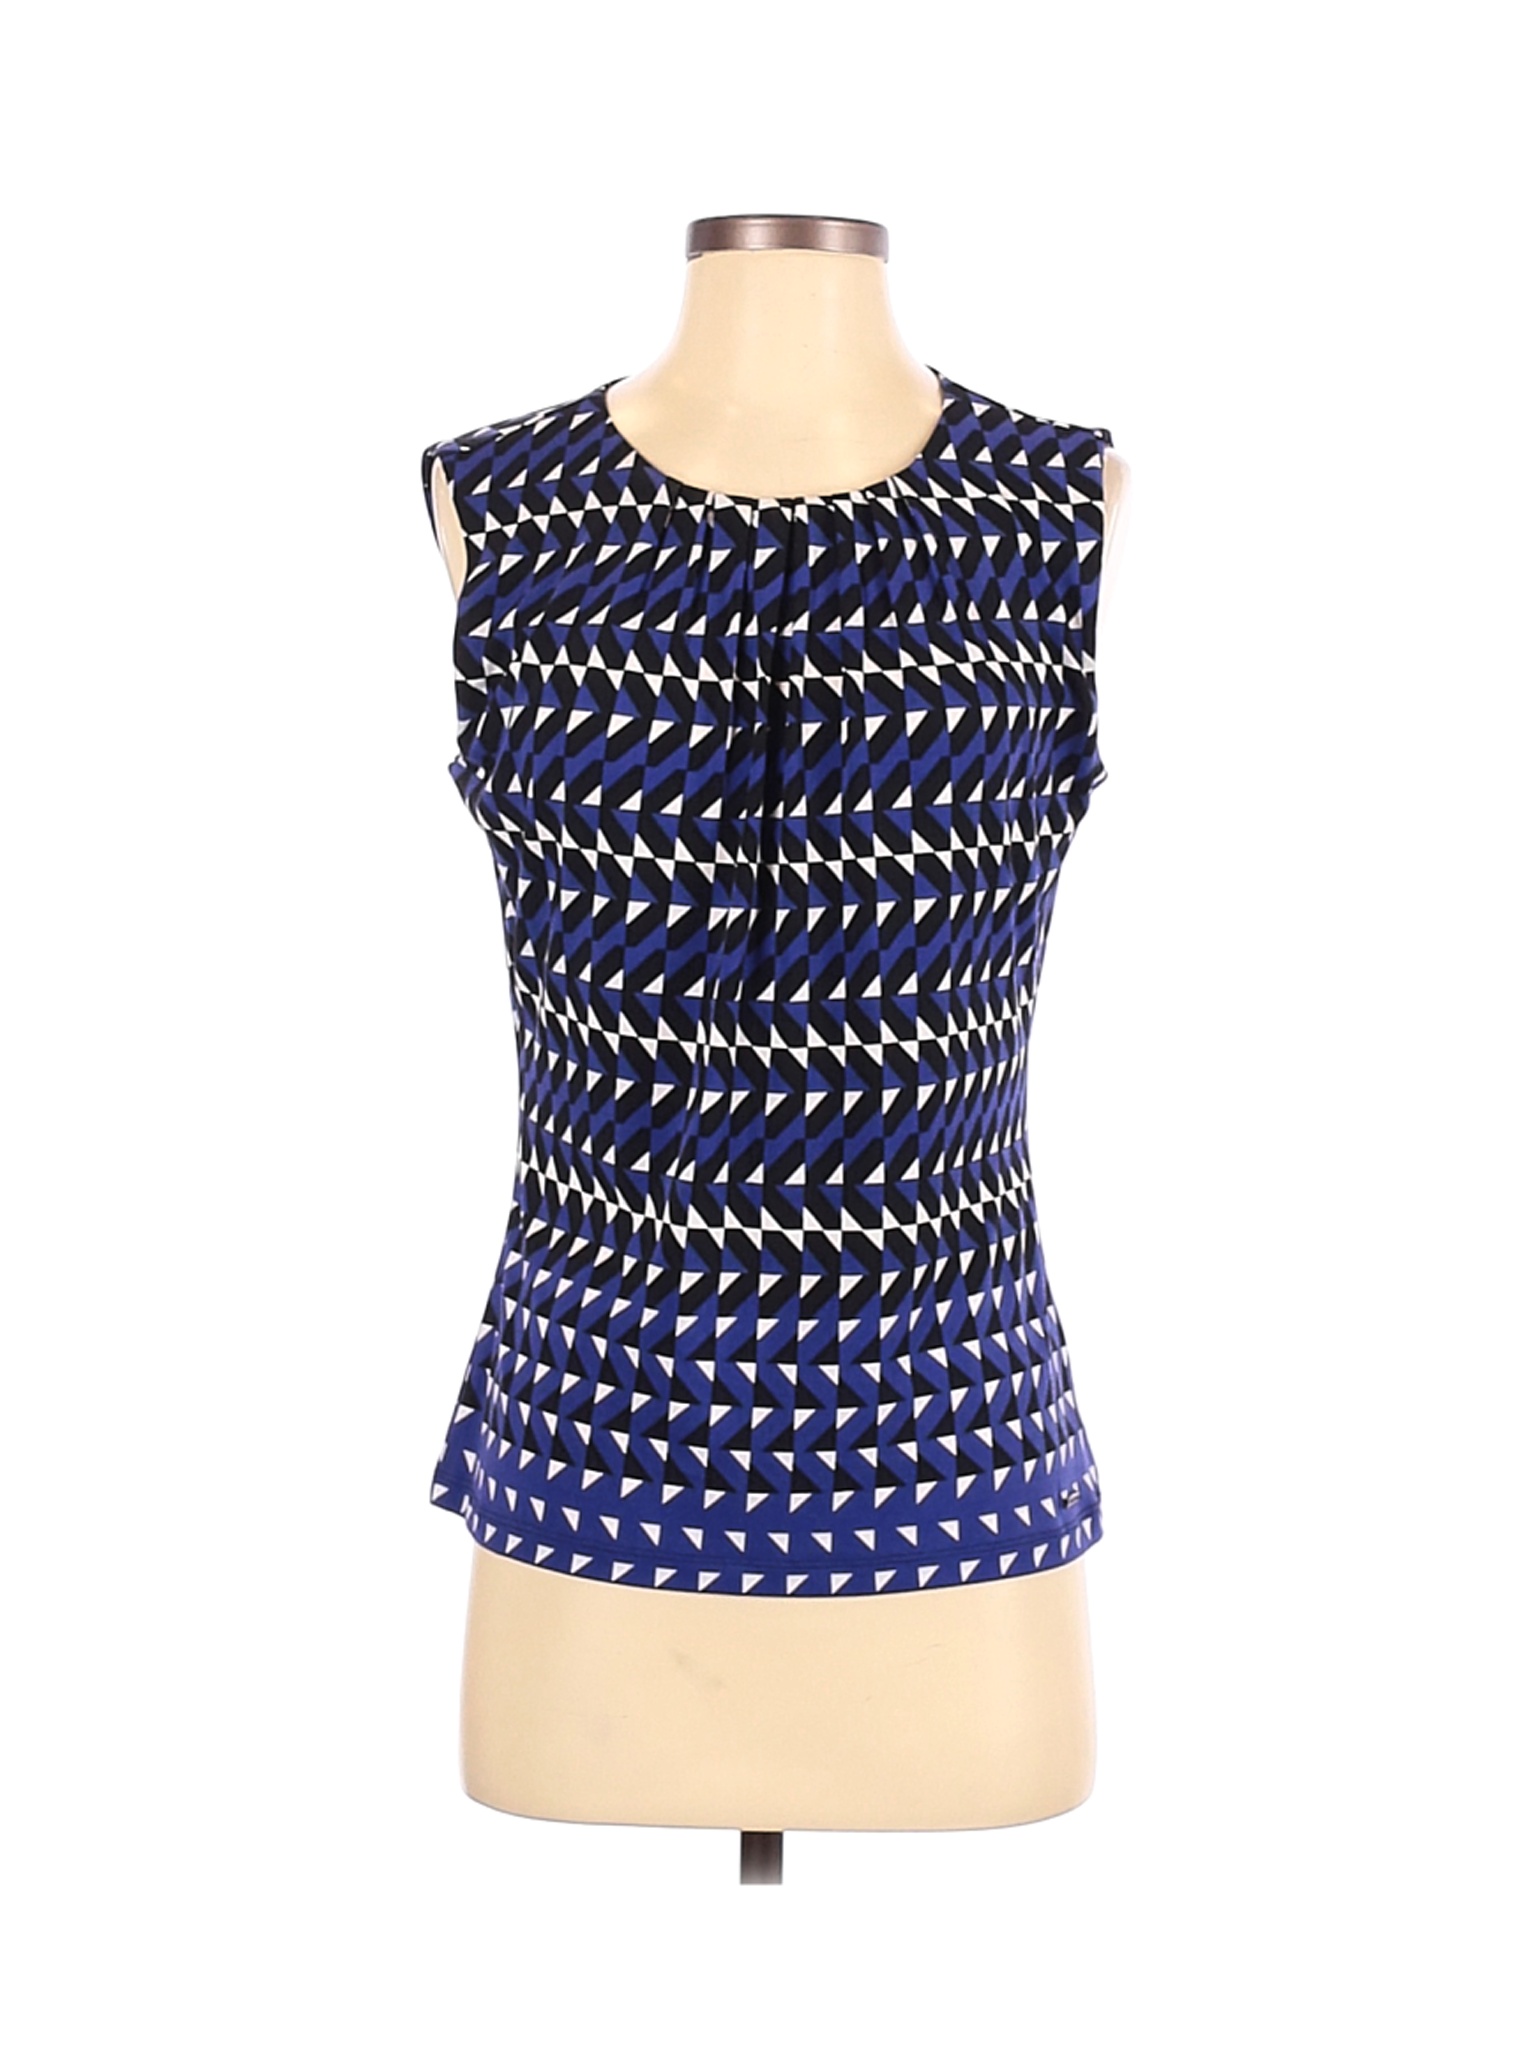 Calvin Klein Women Blue Sleeveless Top S | eBay